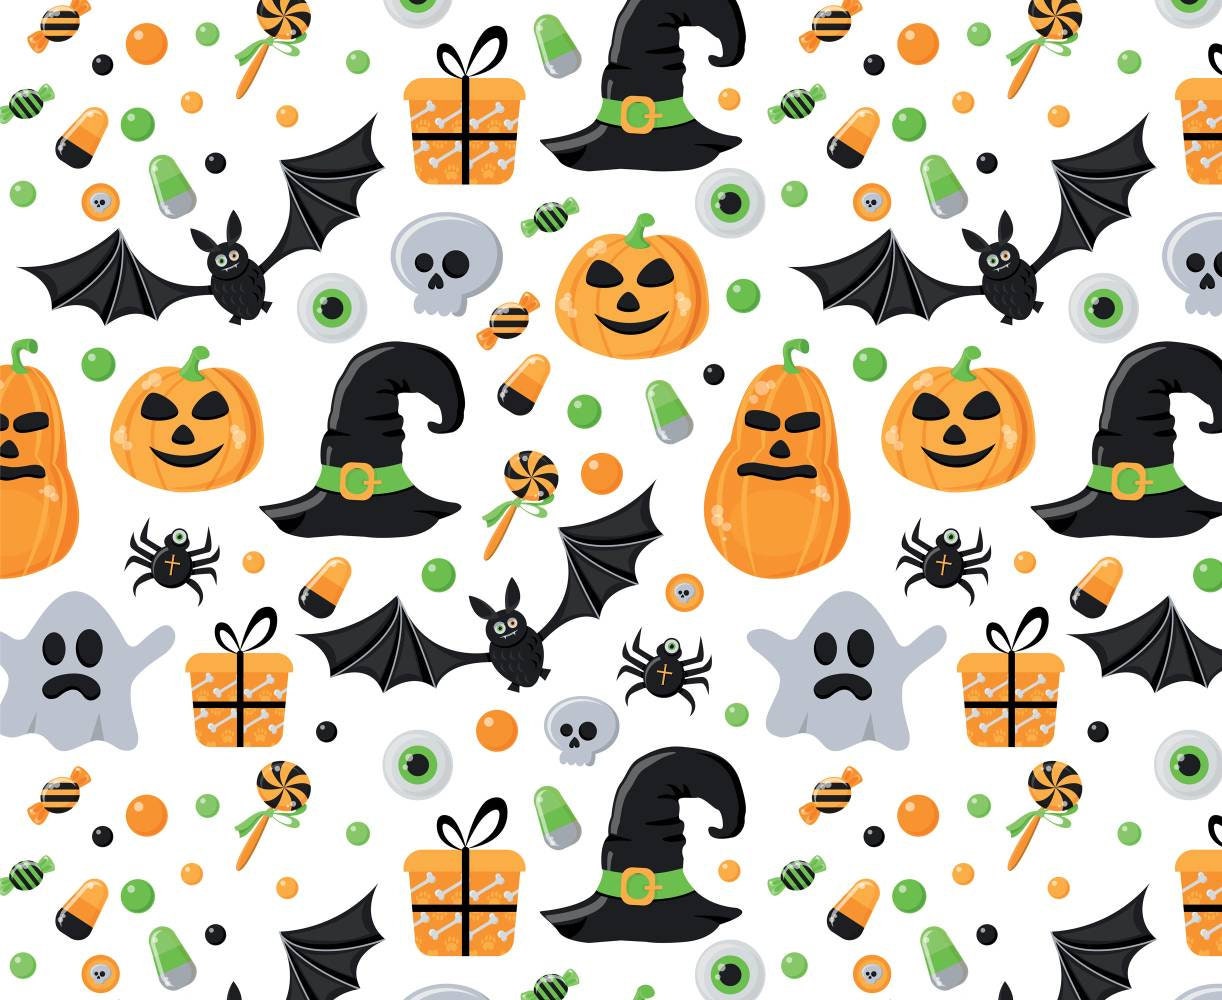 Pumpkin fabric by the yard Halloween fabric 2021 Bat fabric | Etsy